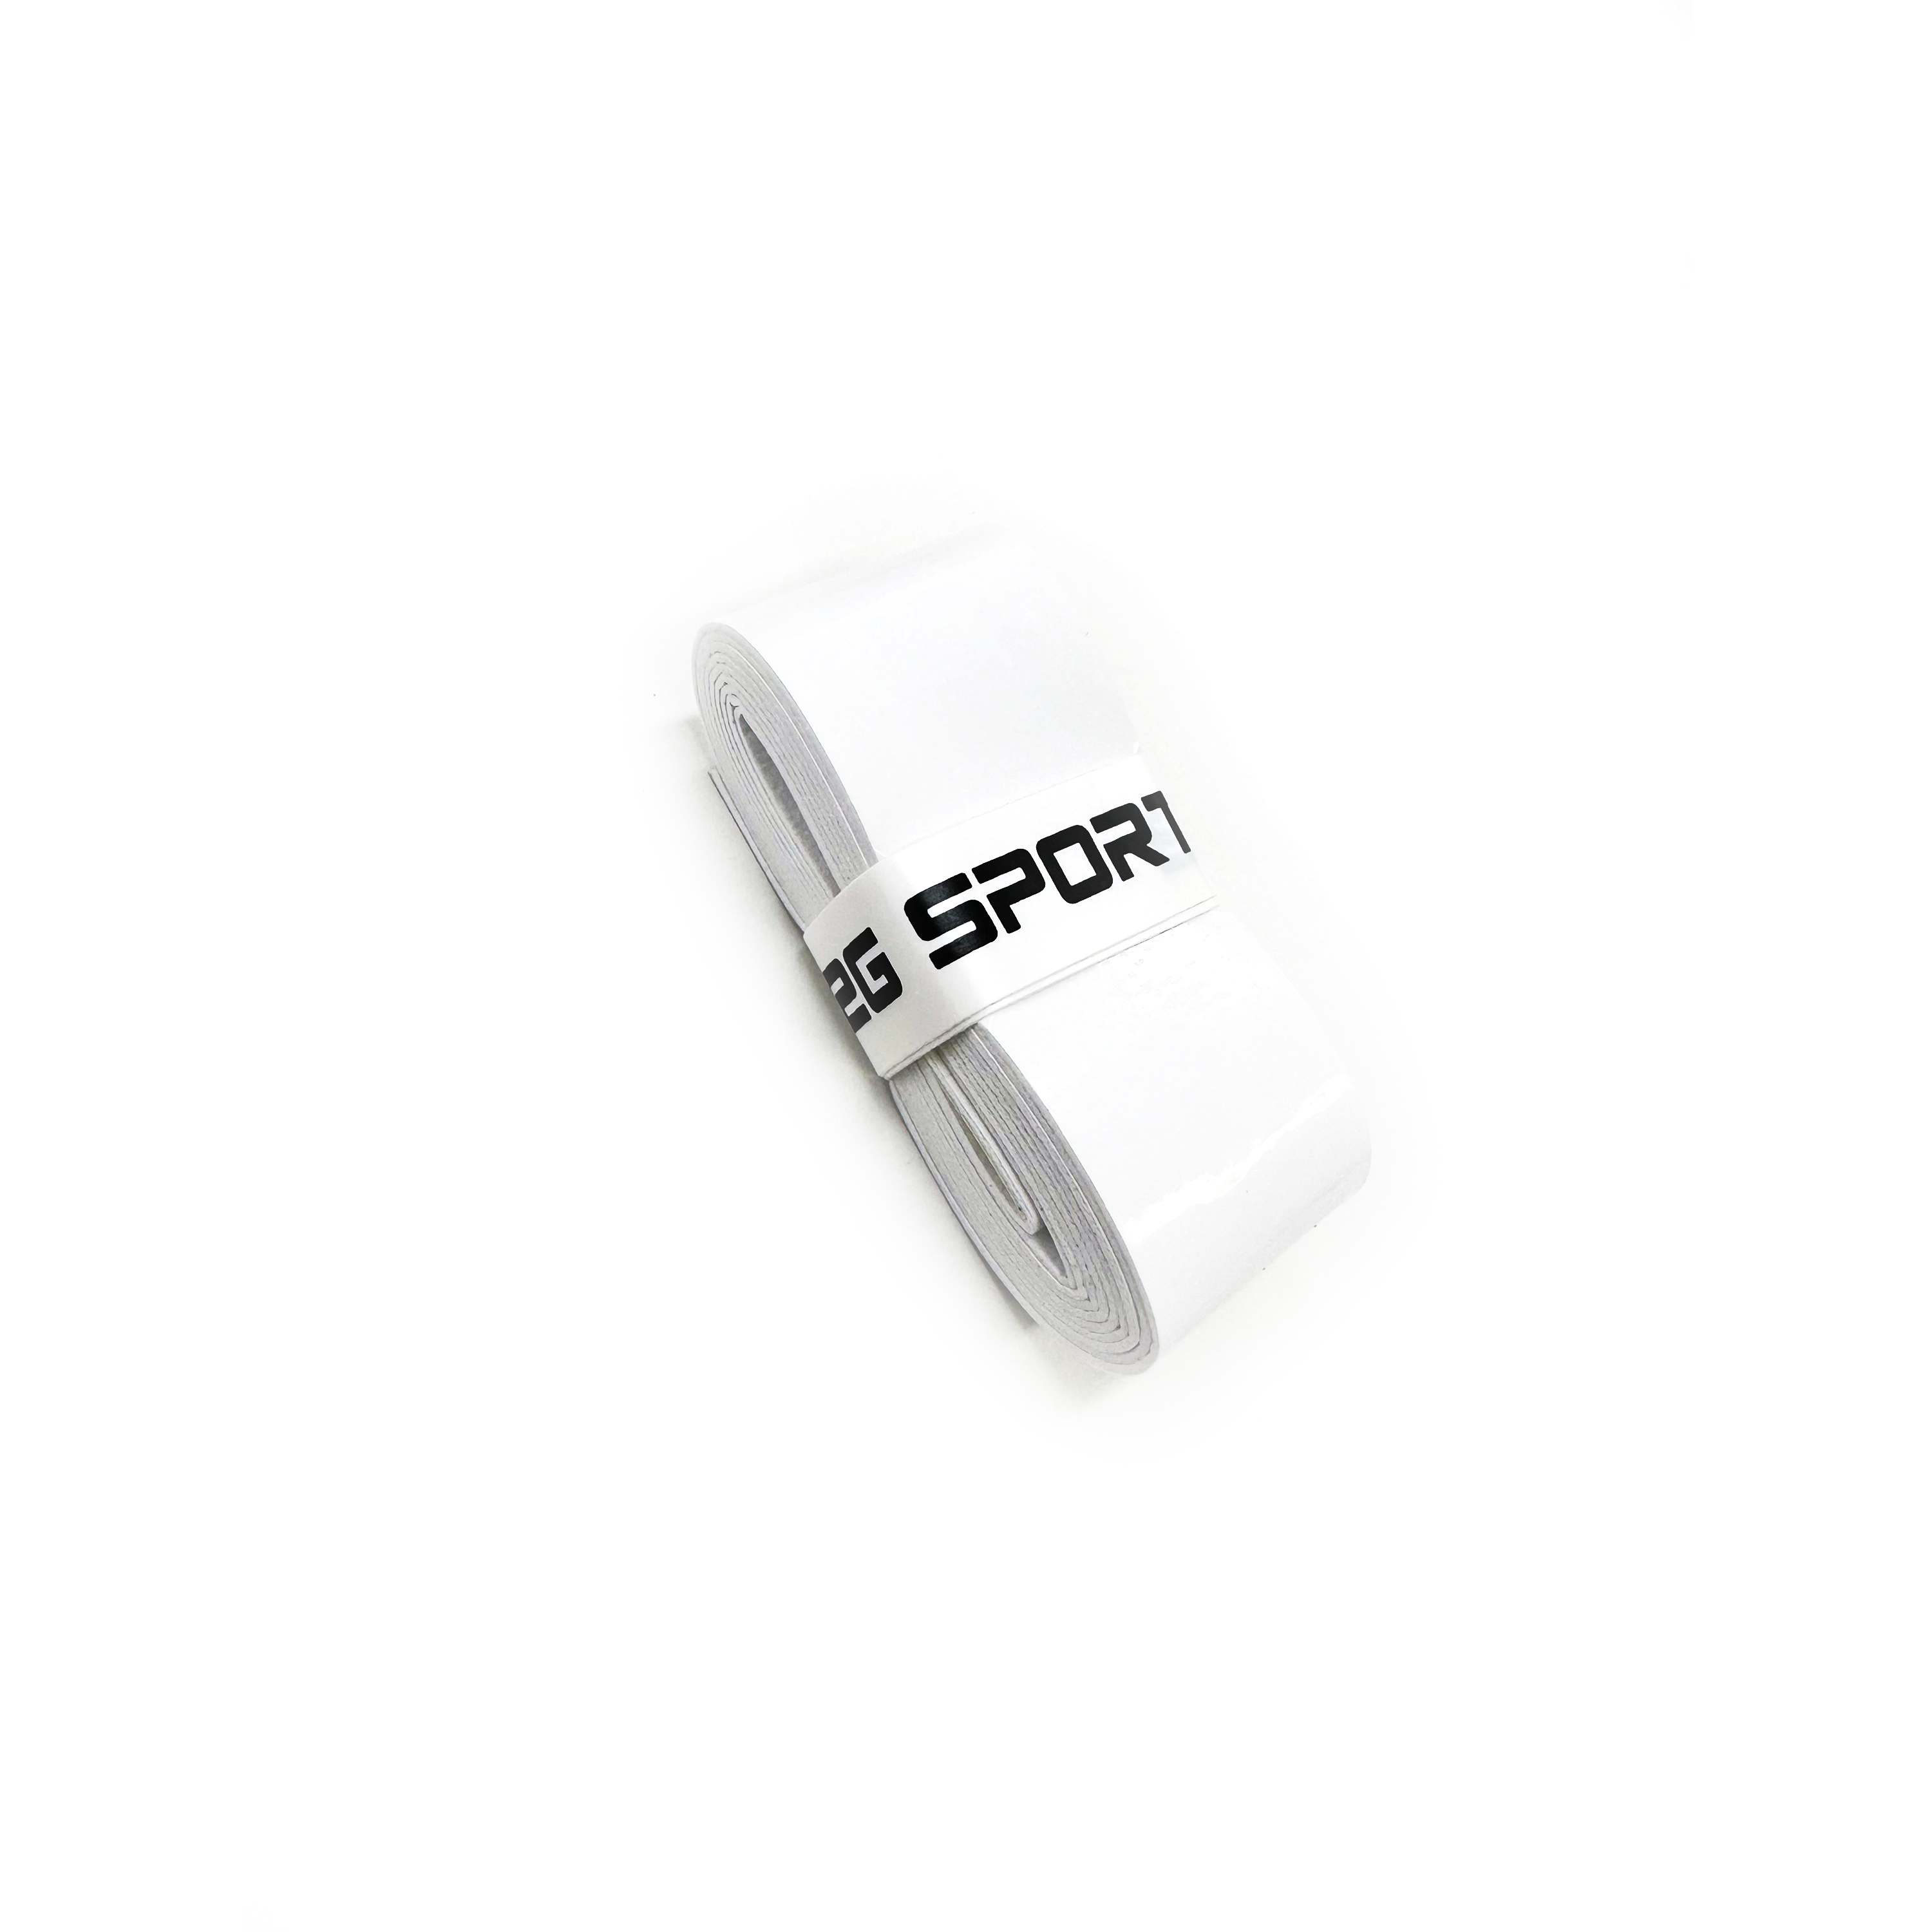 2G SPORTS UltraThin Badminton/ Tennis Grip (1 wrap)